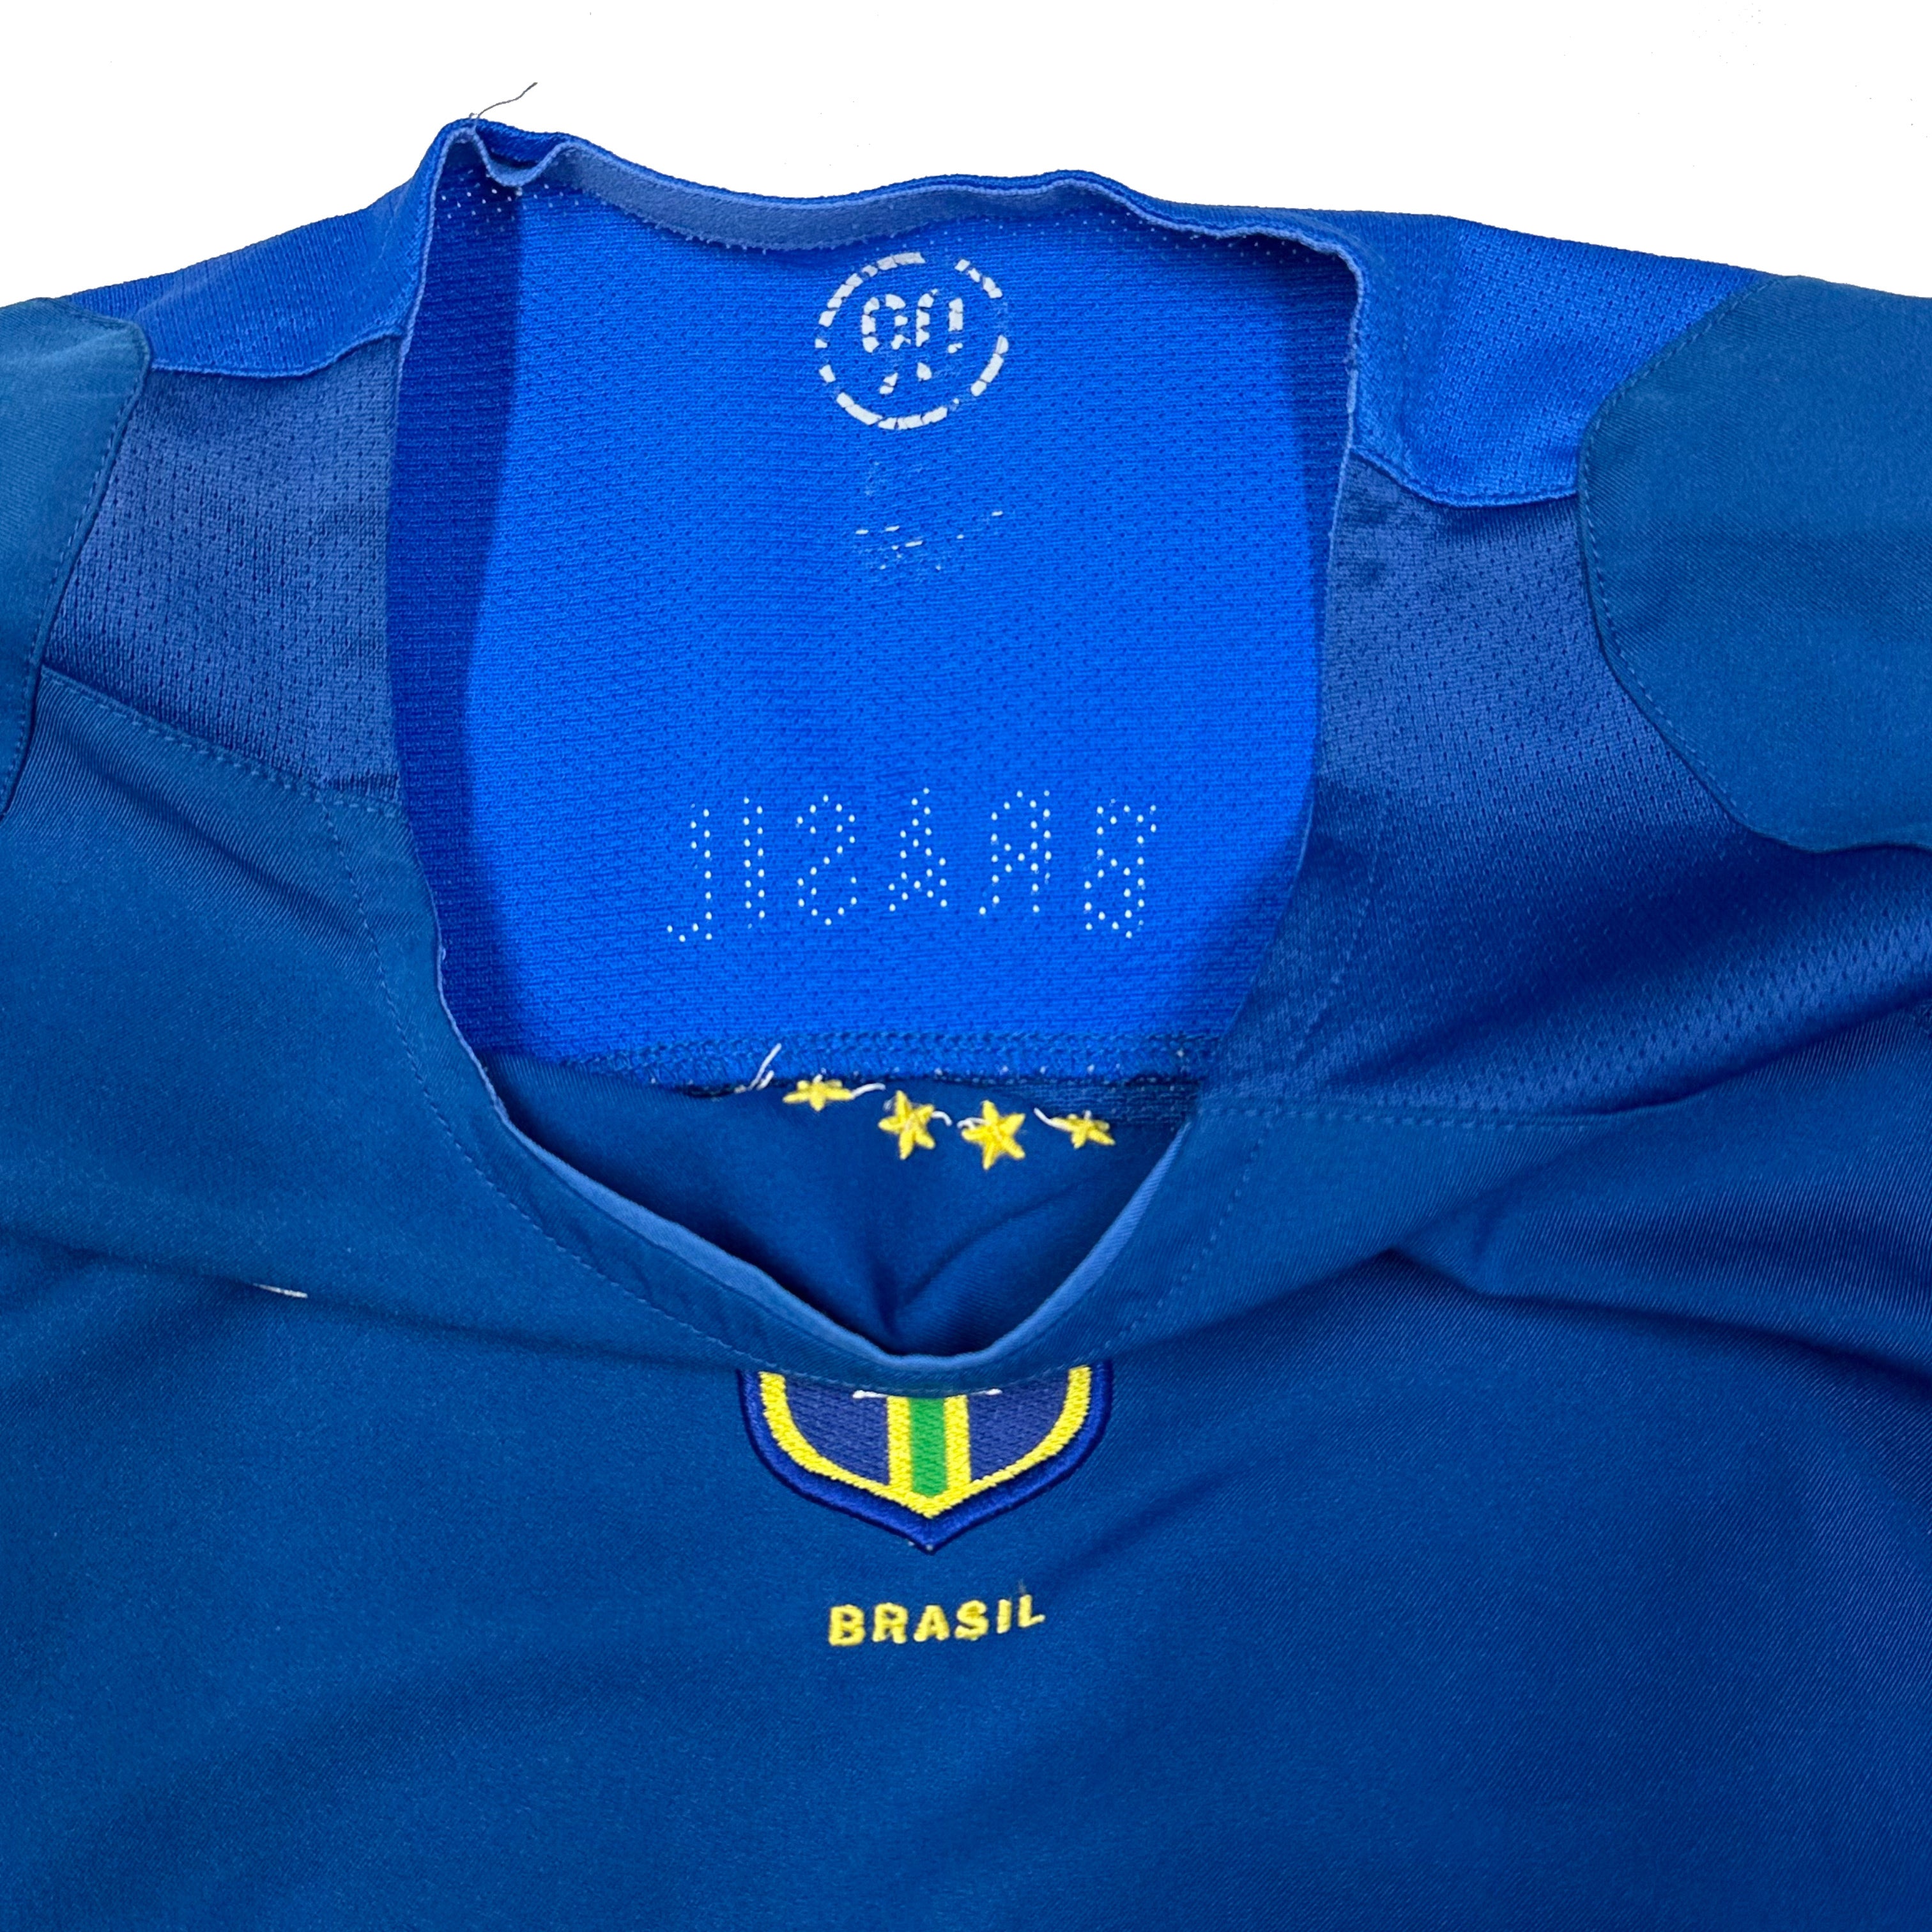 Nike 2004 Brazil Shirt In Blue ( M )